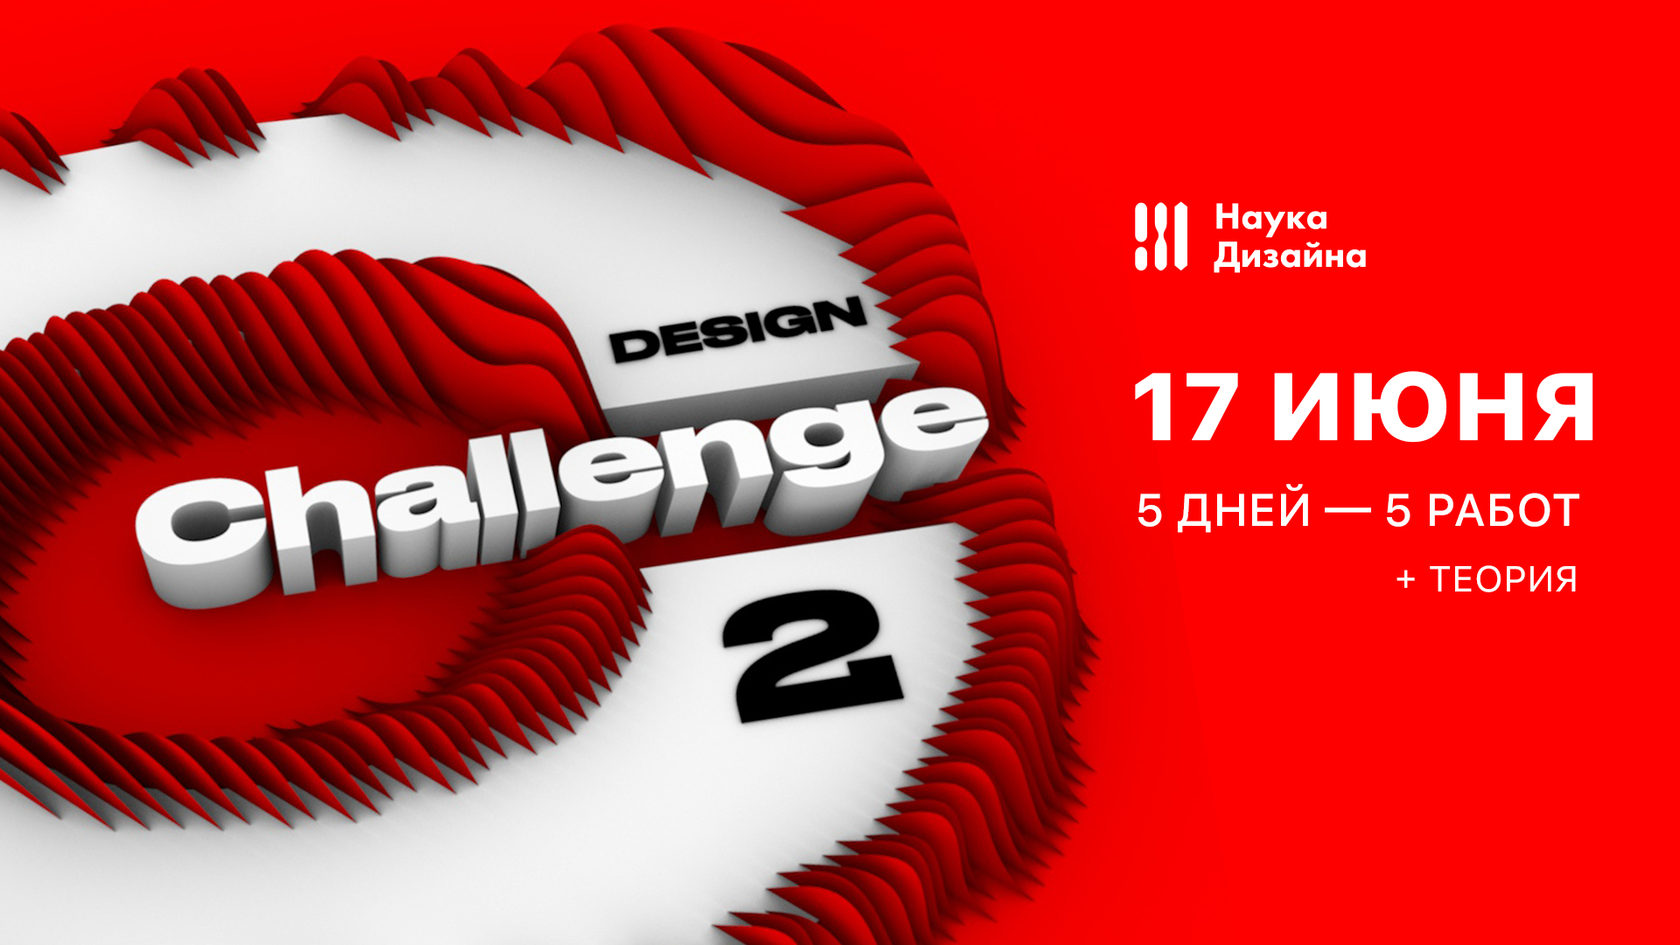 Https 5 challenge ru